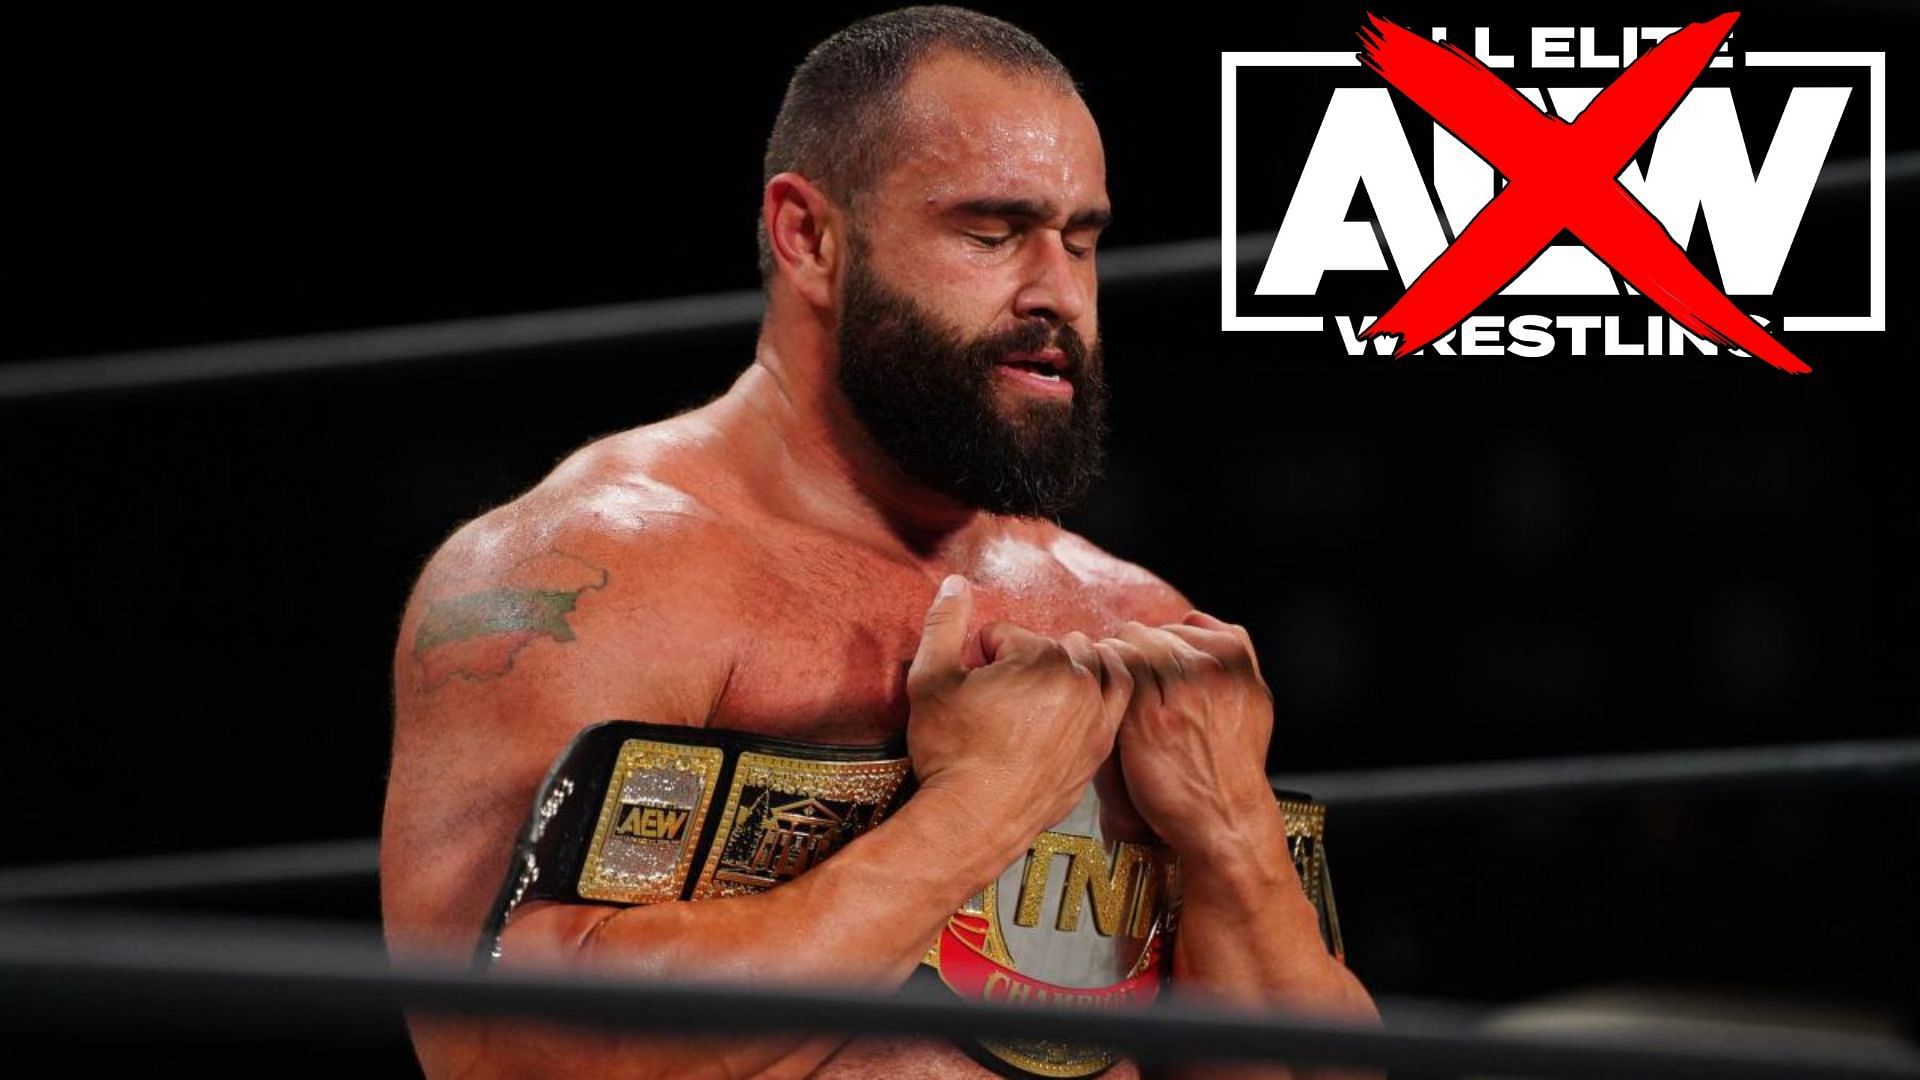 Will Miro continue his pro wrestling career in AEW?